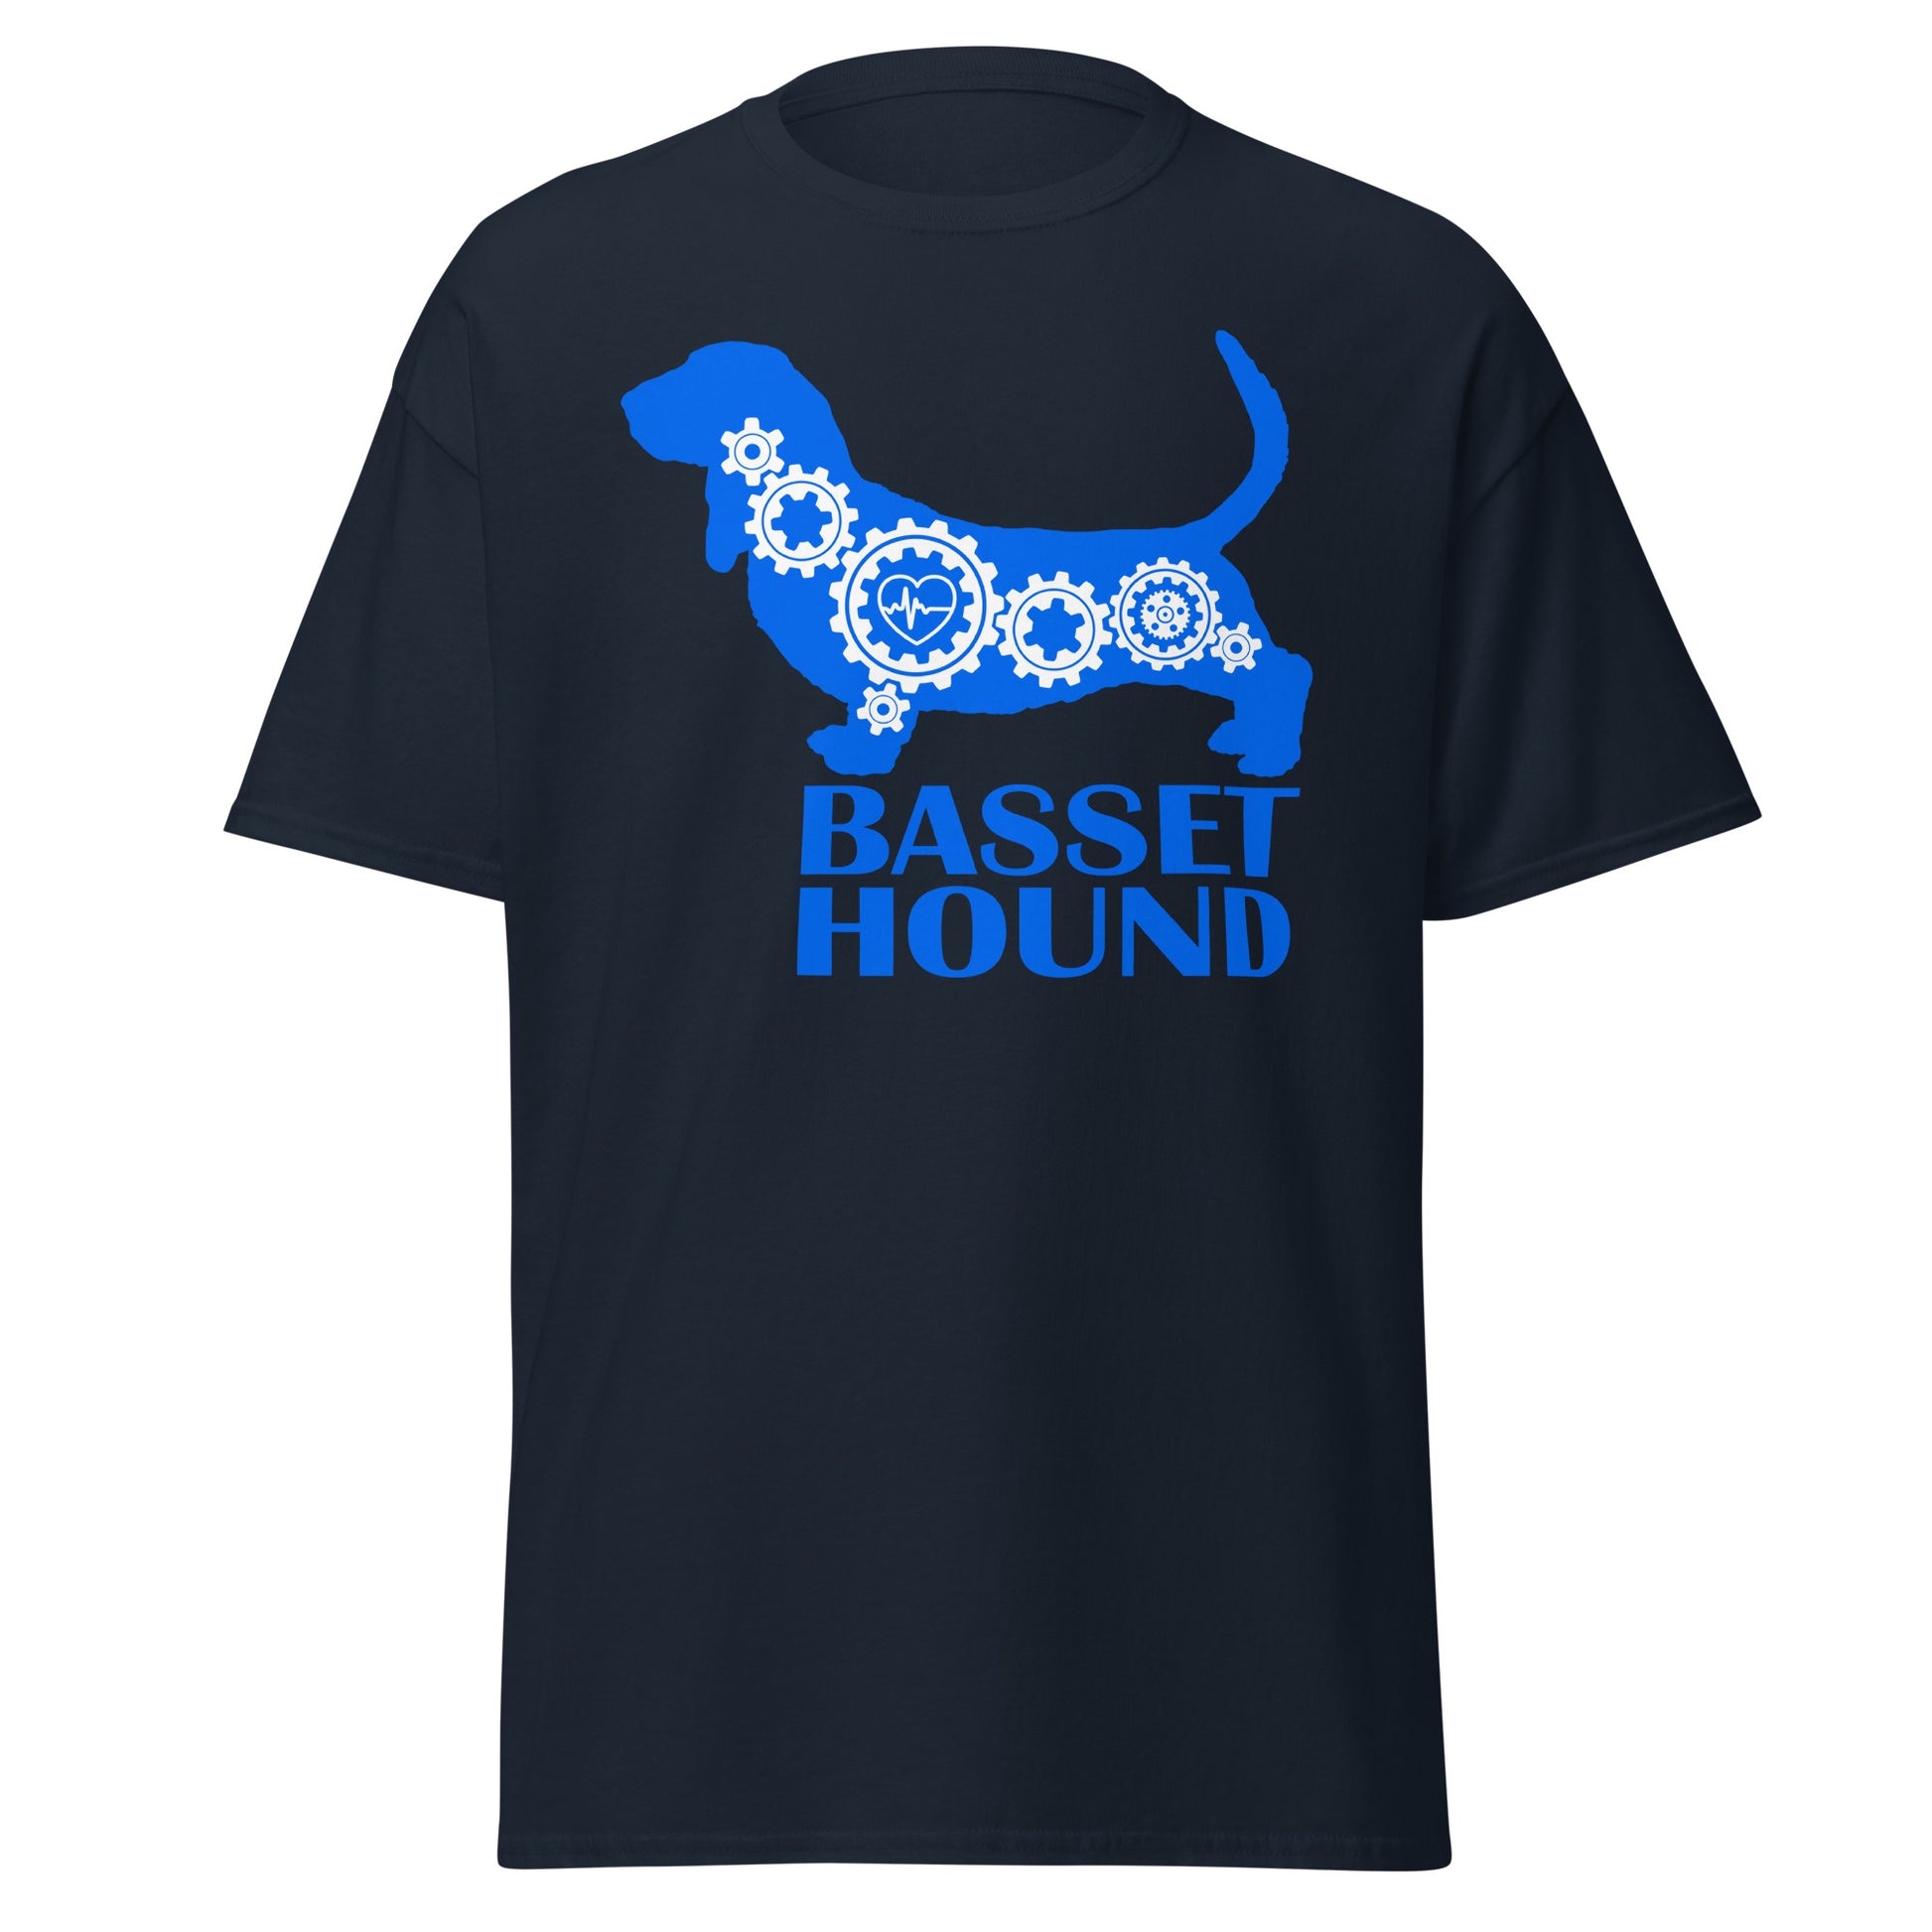 Basset Hound Bionic men’s navy t-shirt by Dog Artistry.